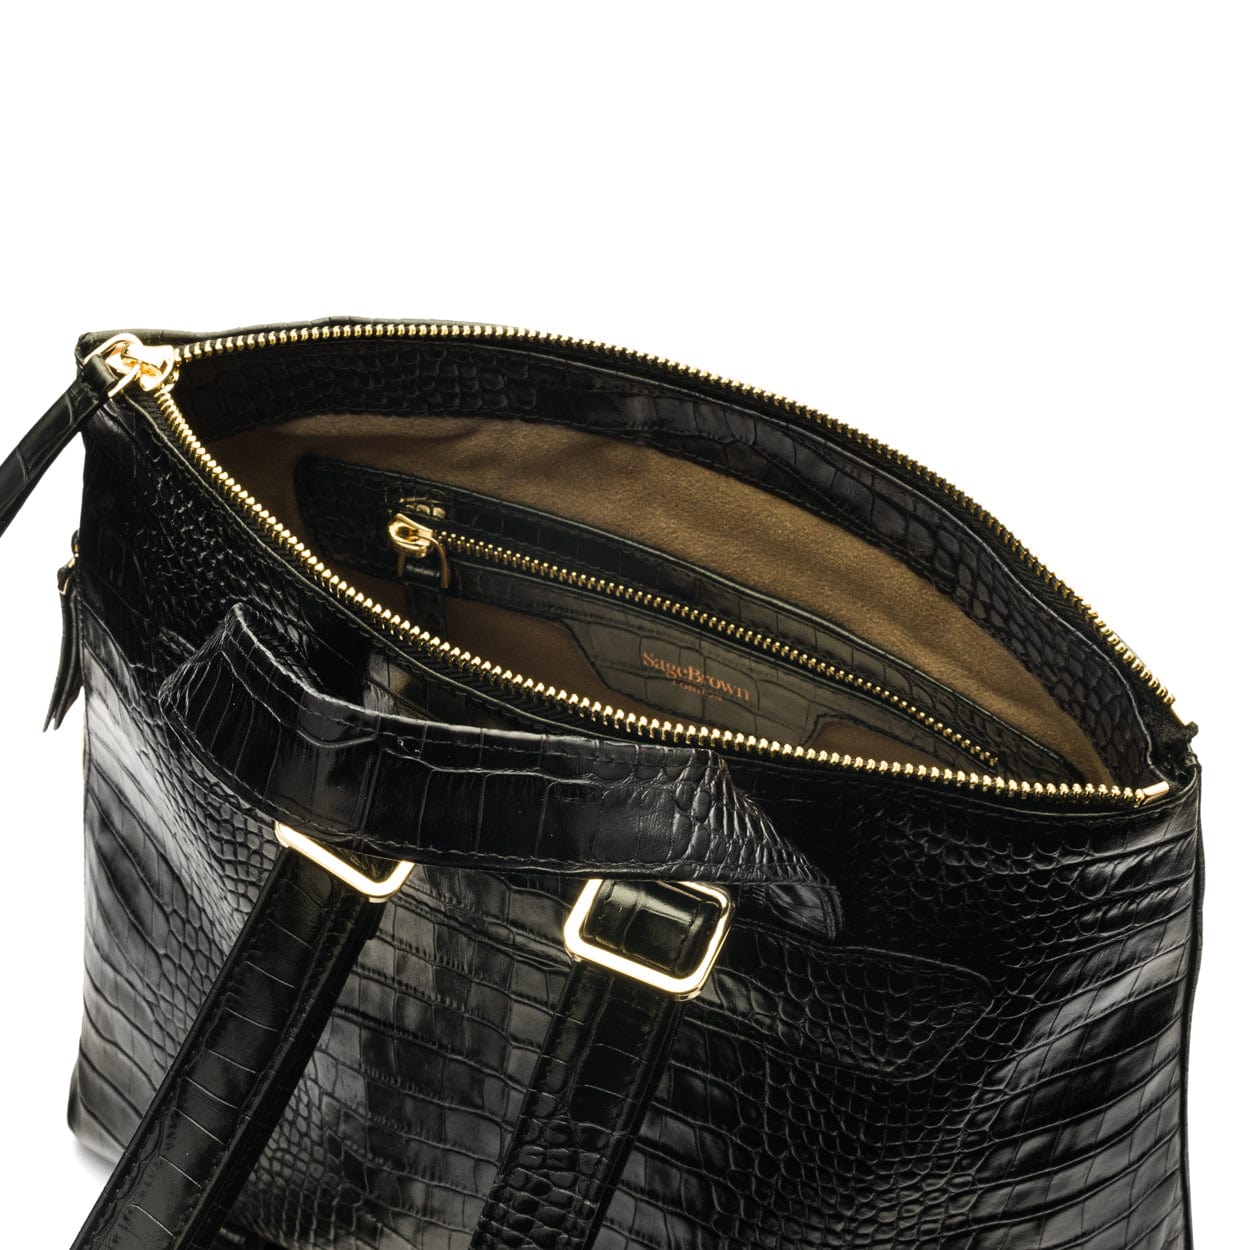 Leather 13" laptop backpack, black croc, open